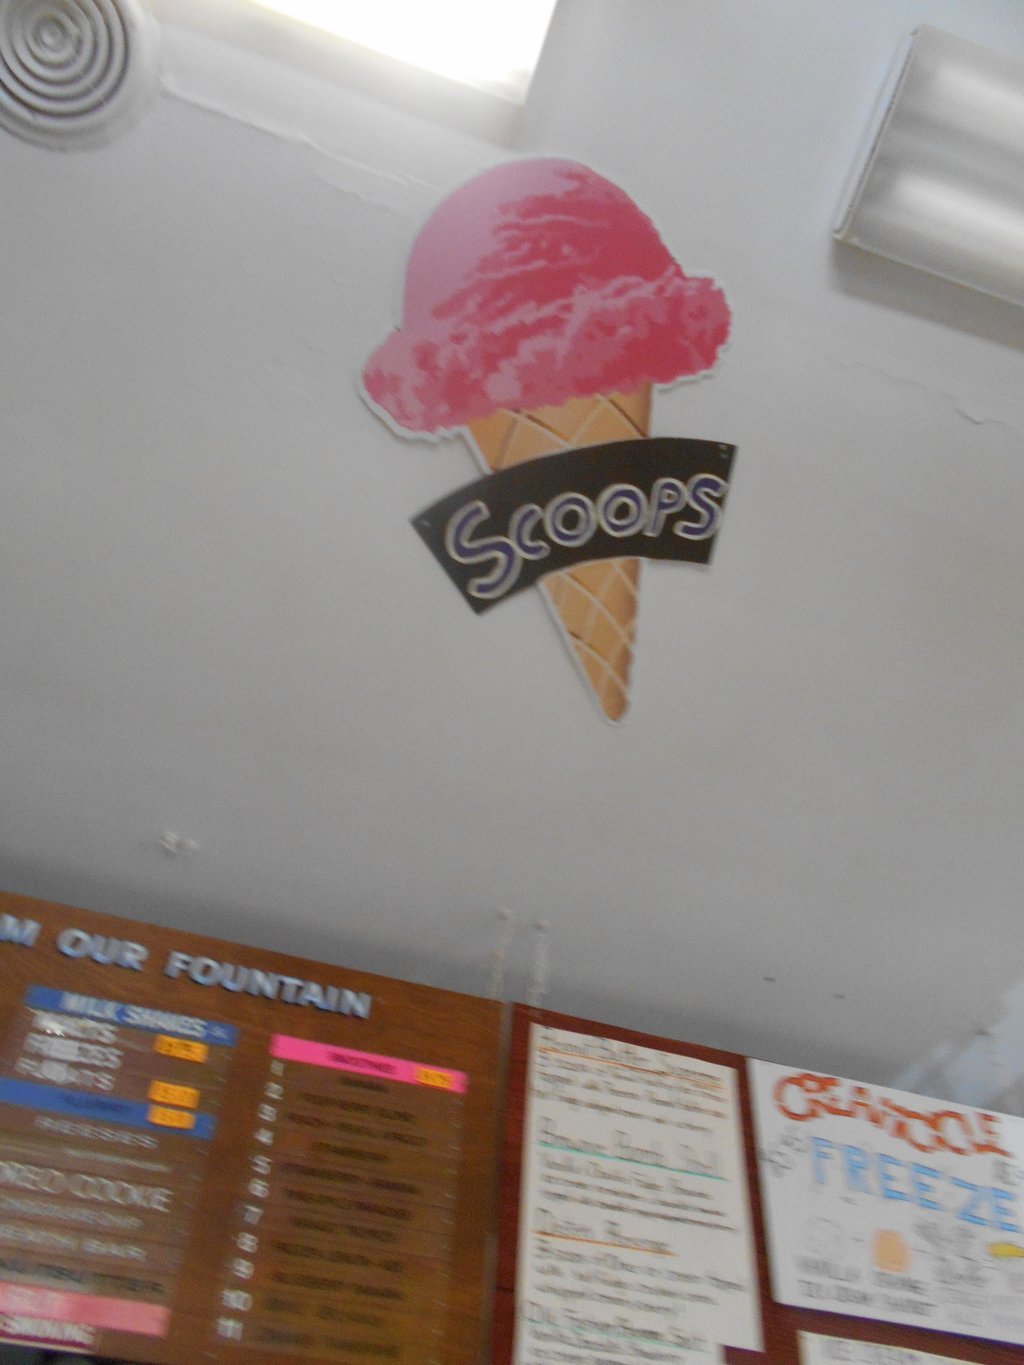 Scoop`s Ice Cream Parlor